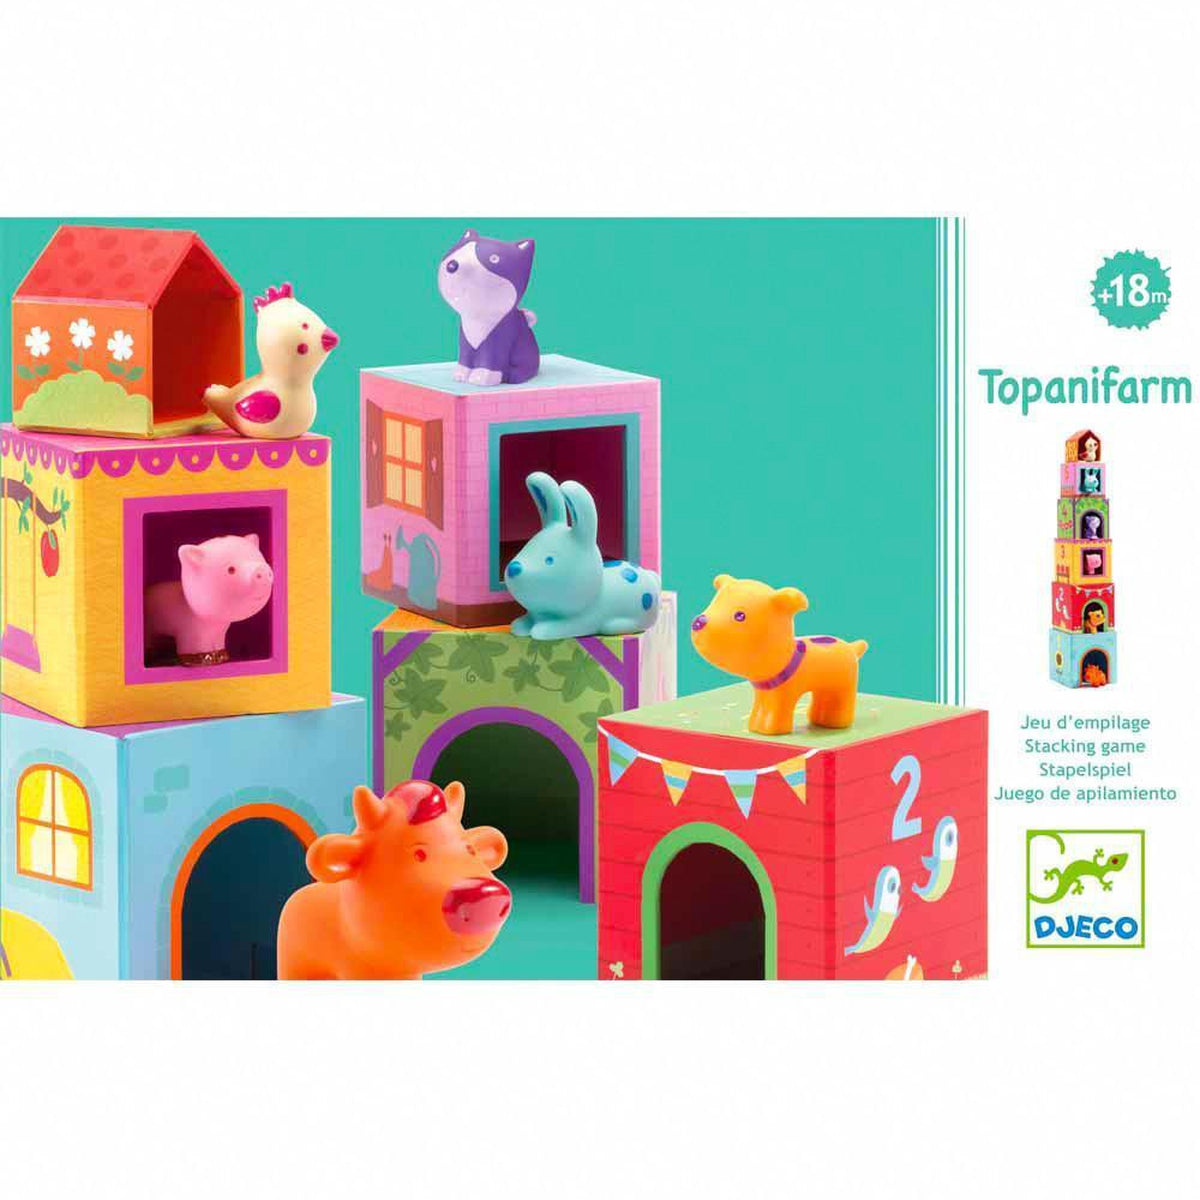 Djeco topanifarm blocks and animal figures-blocks & building sets-Djeco-Dilly Dally Kids